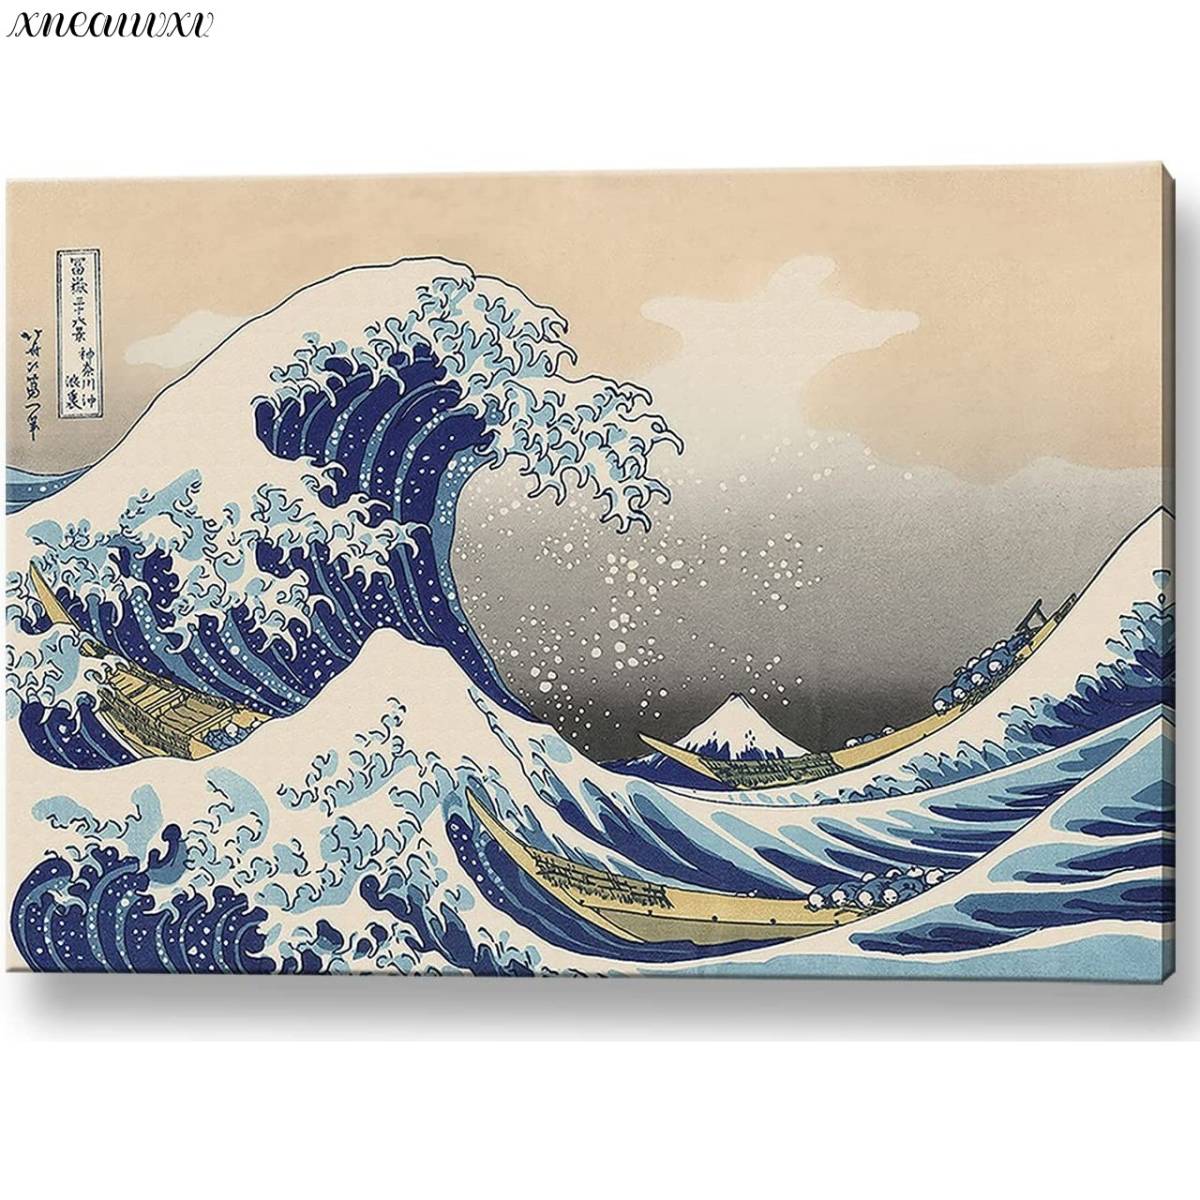 Panel de arte de Katsushika Hokusai Treinta y seis vistas del monte Fuji La gran ola de Kanagawa Reproducción Arte de vistas espectaculares Decoración de estilo japonés Paisaje natural clásico Pintura marina Arte de interiores, cuadro, Ukiyo-e, imprimir, foto de lugar famoso